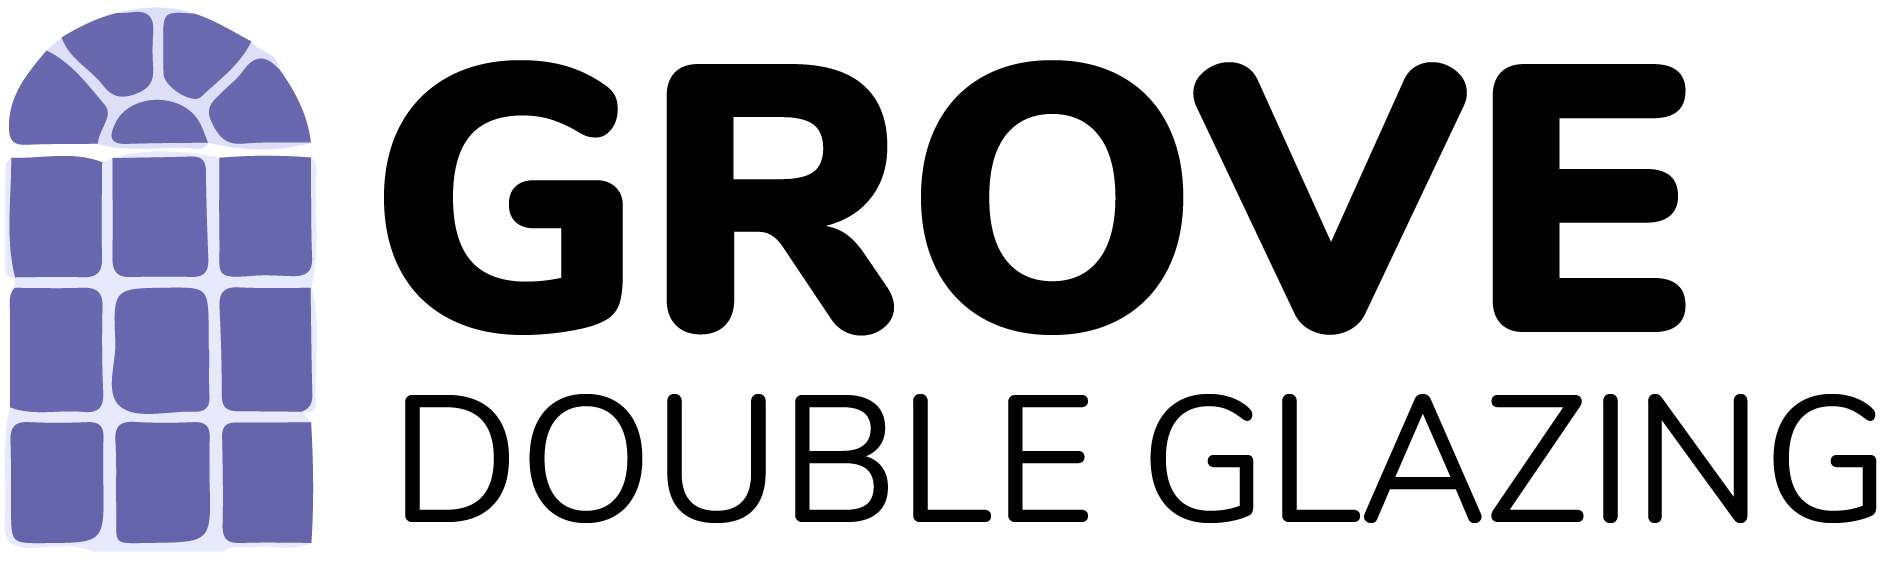 grove-double-glazing-logo